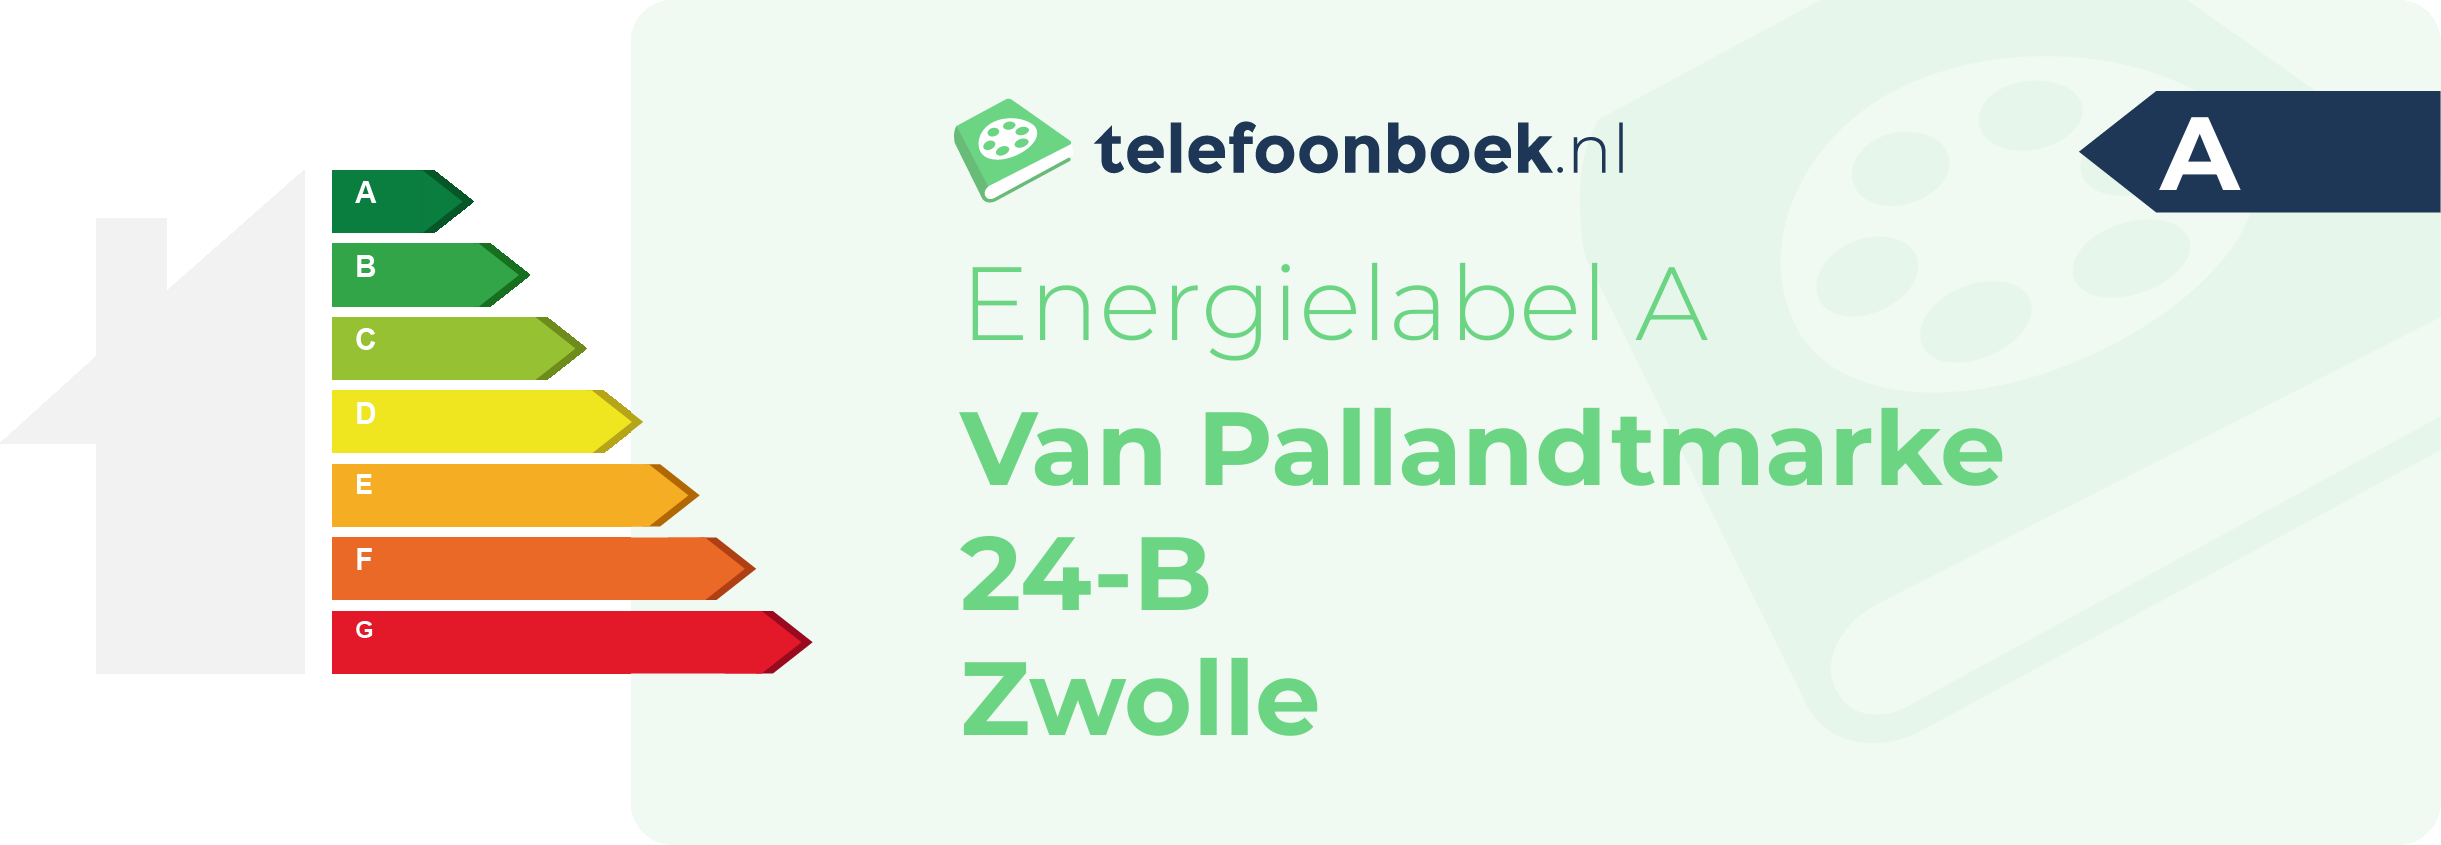 Energielabel Van Pallandtmarke 24-B Zwolle